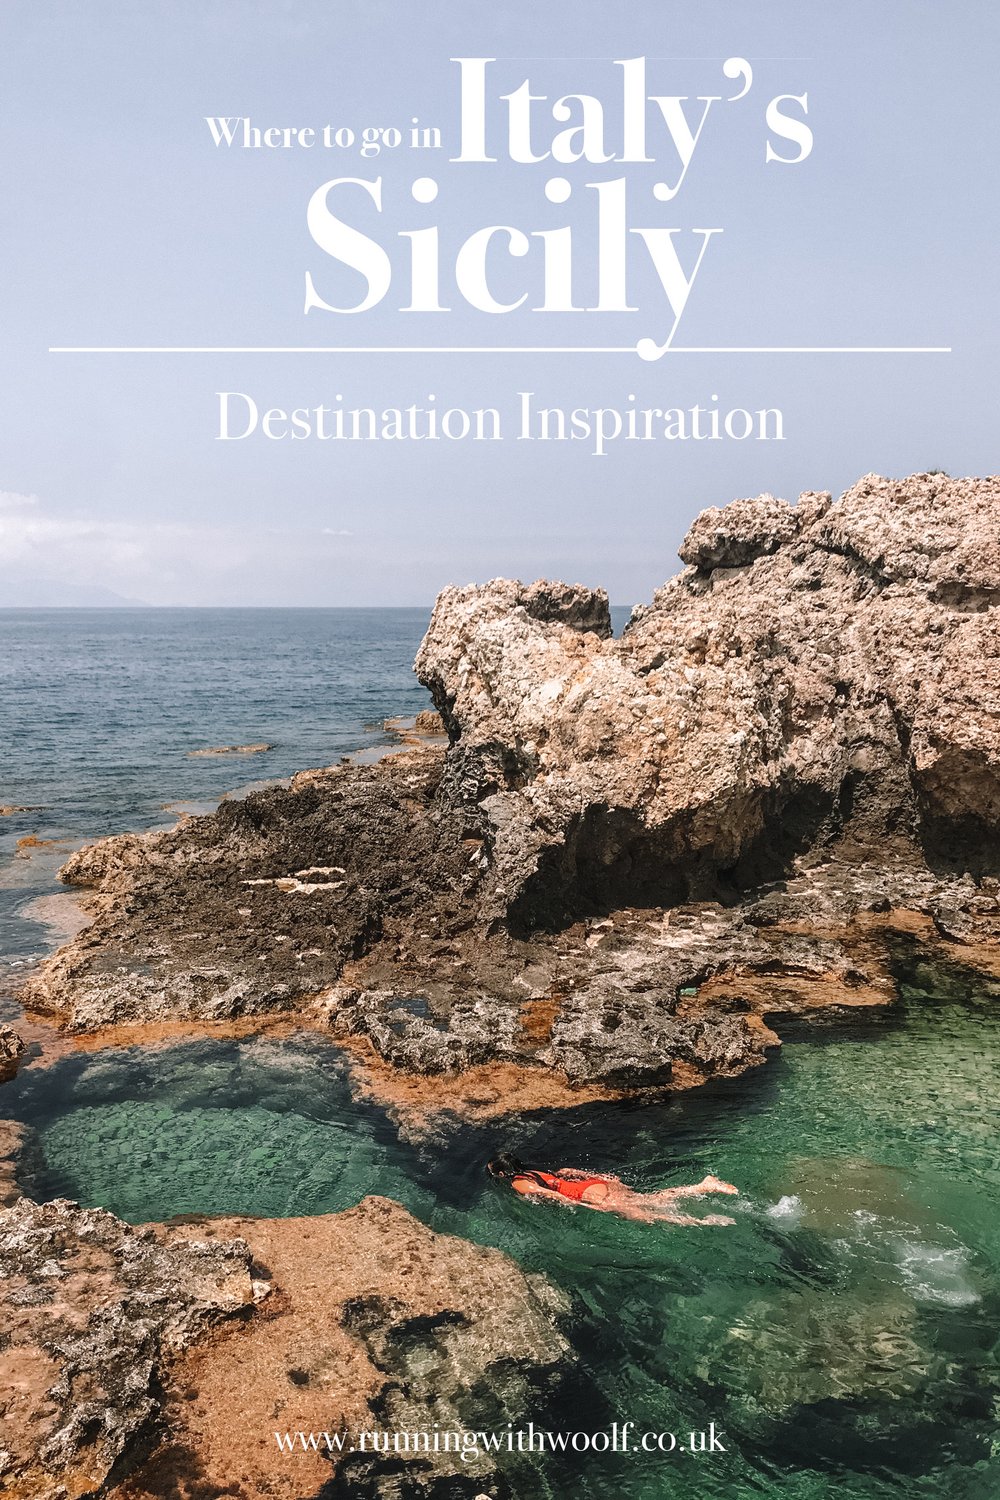 Where to go in Sicily 1.jpg